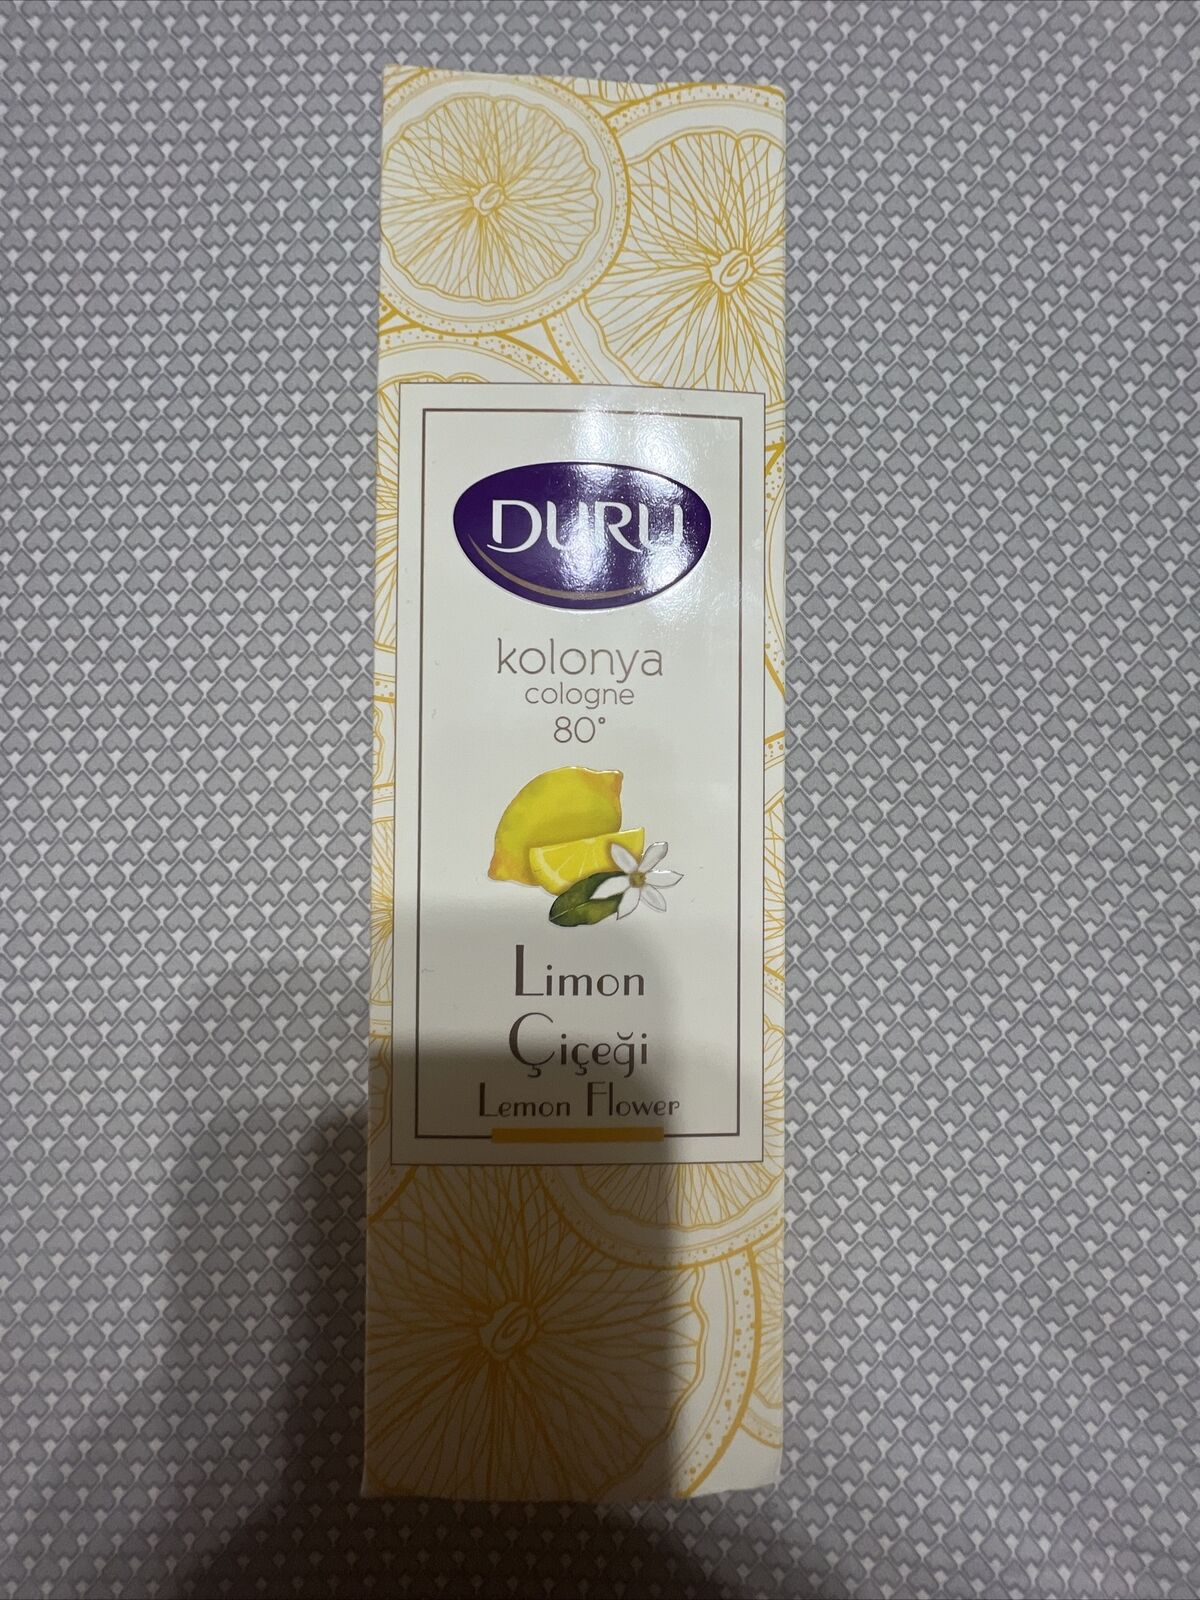 Duru Turkish Limon Kolonyasi - Lemon Cologne 400mL Shipping From United State